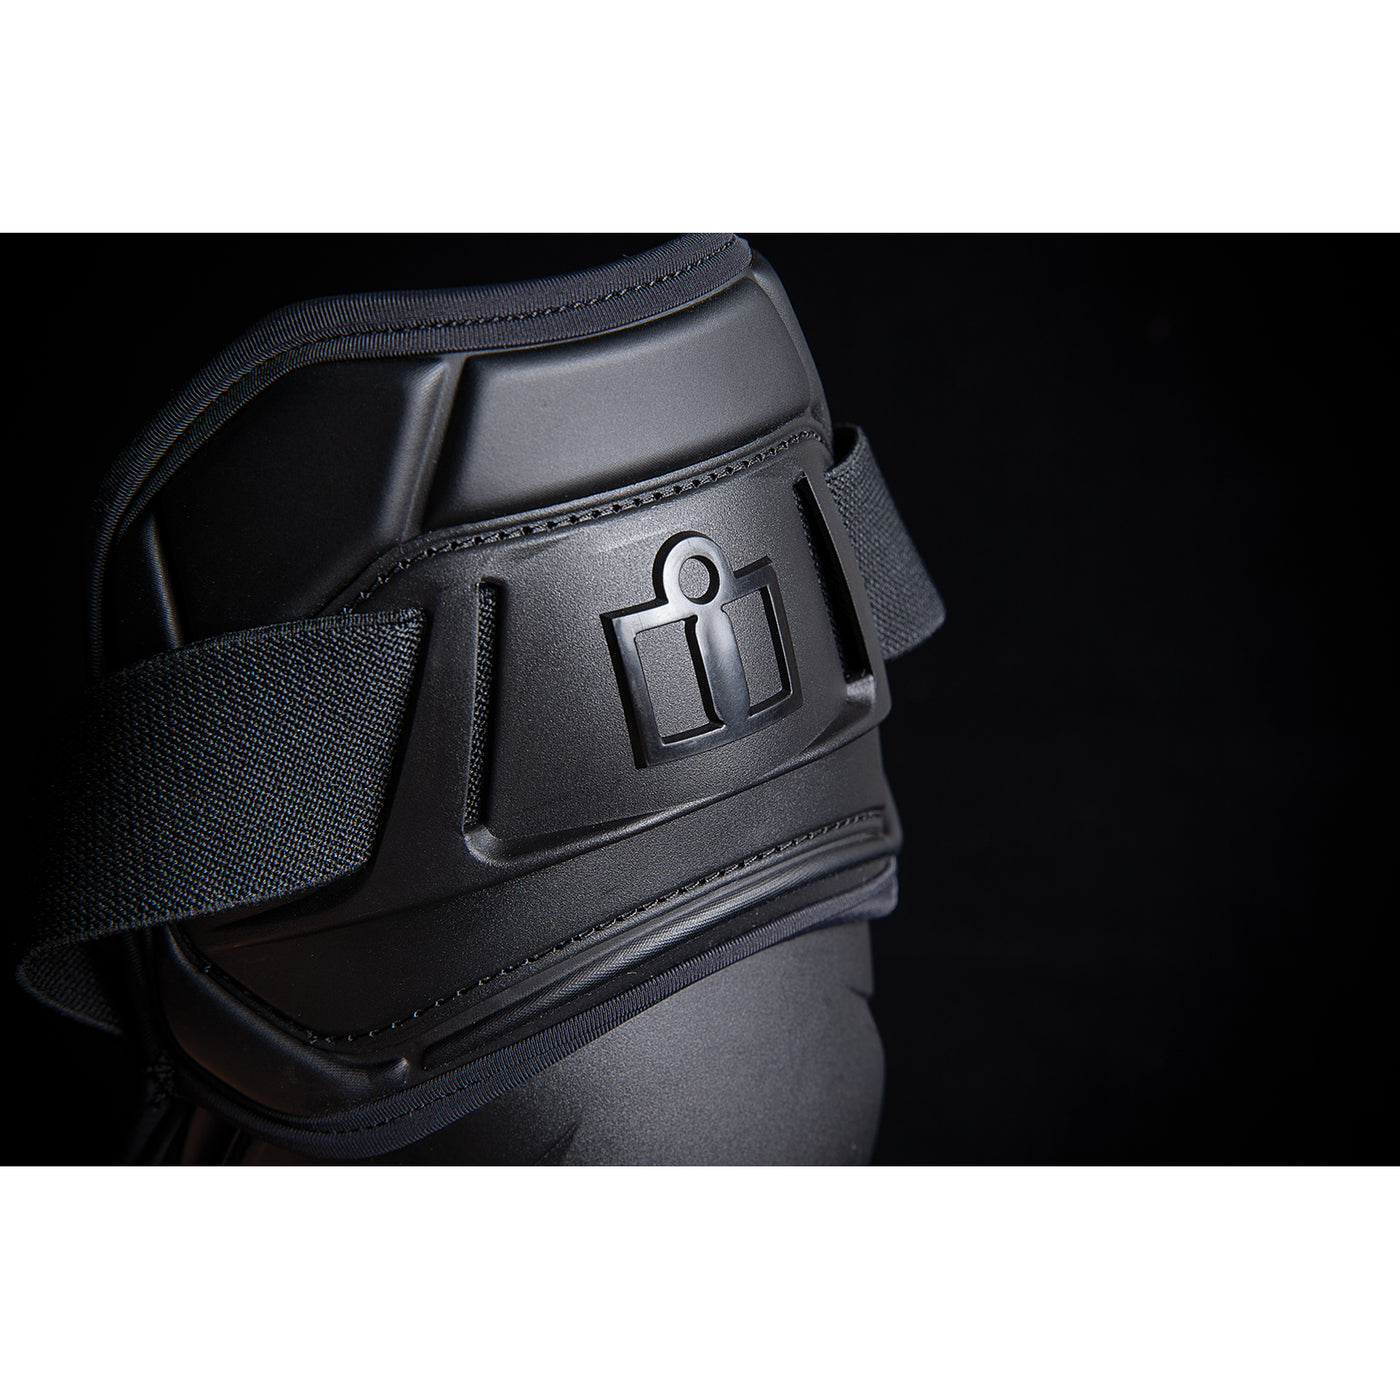 ICON Field Armor 3™ Knees